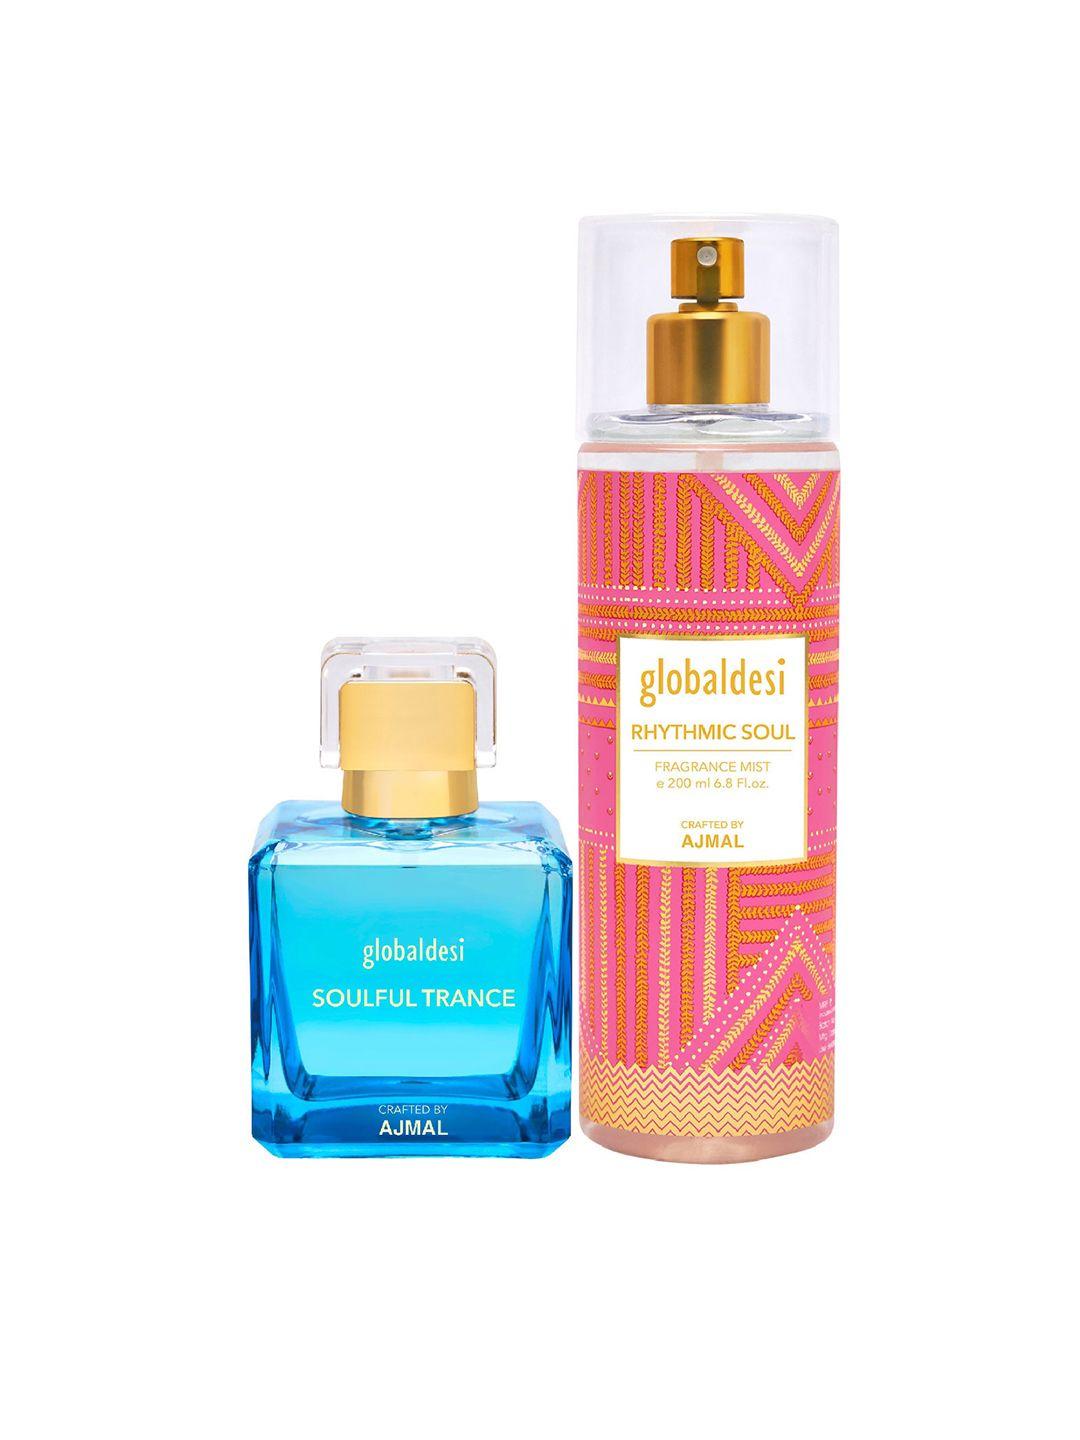 global desi women set of 2 perfumes